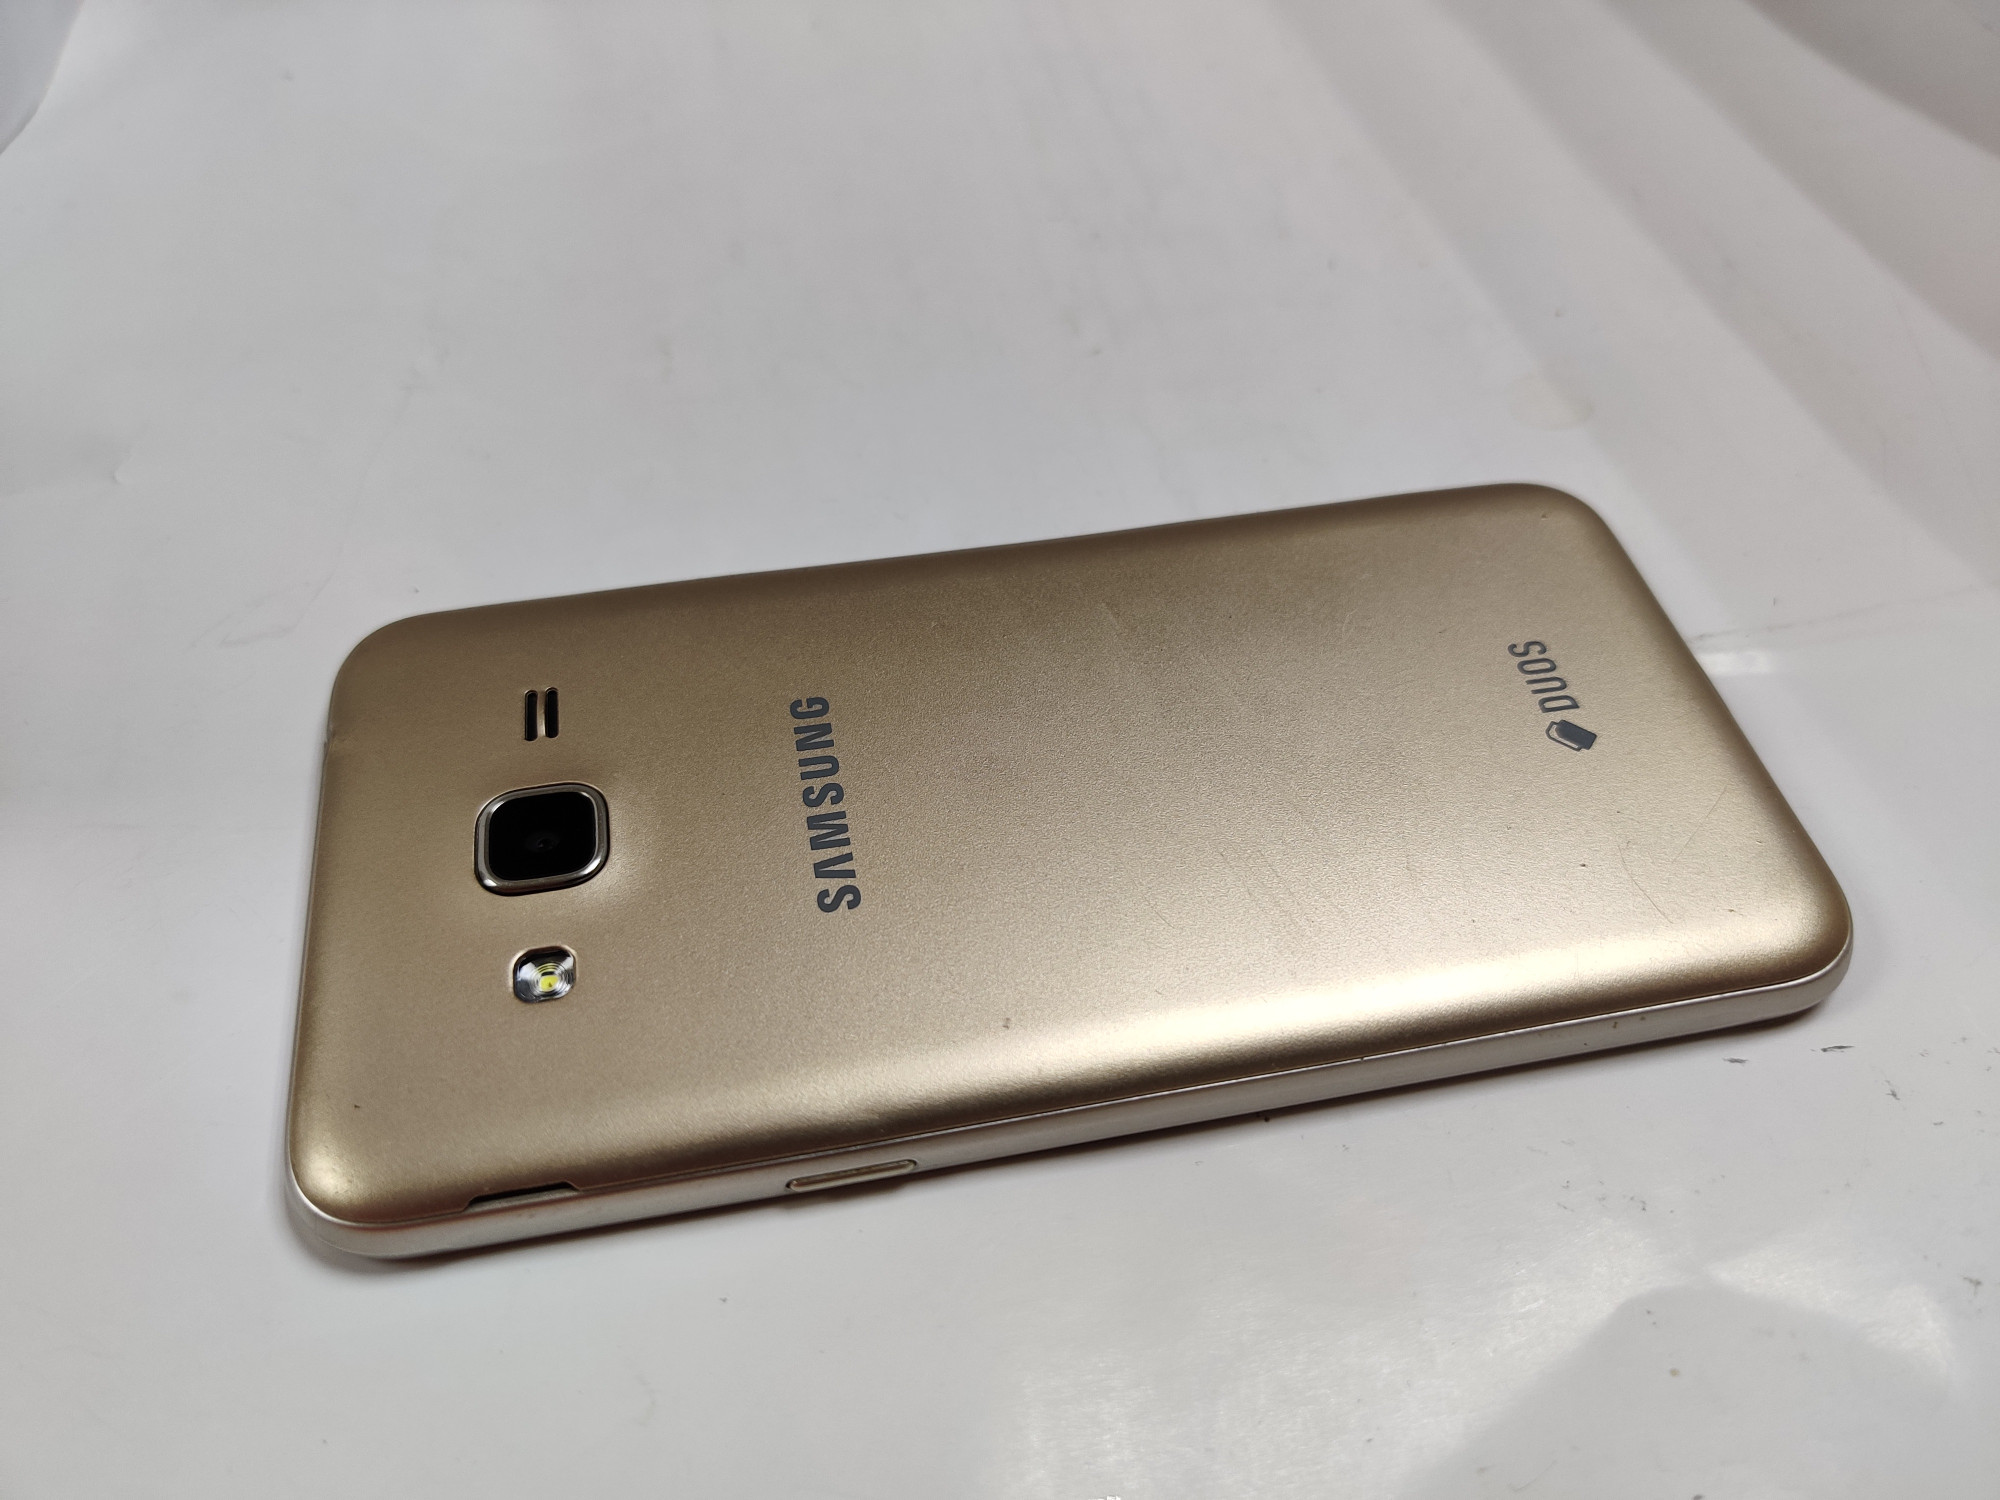 Samsung Galaxy J3 2016 Gold (SM-J320HZDD) 1/8Gb 5